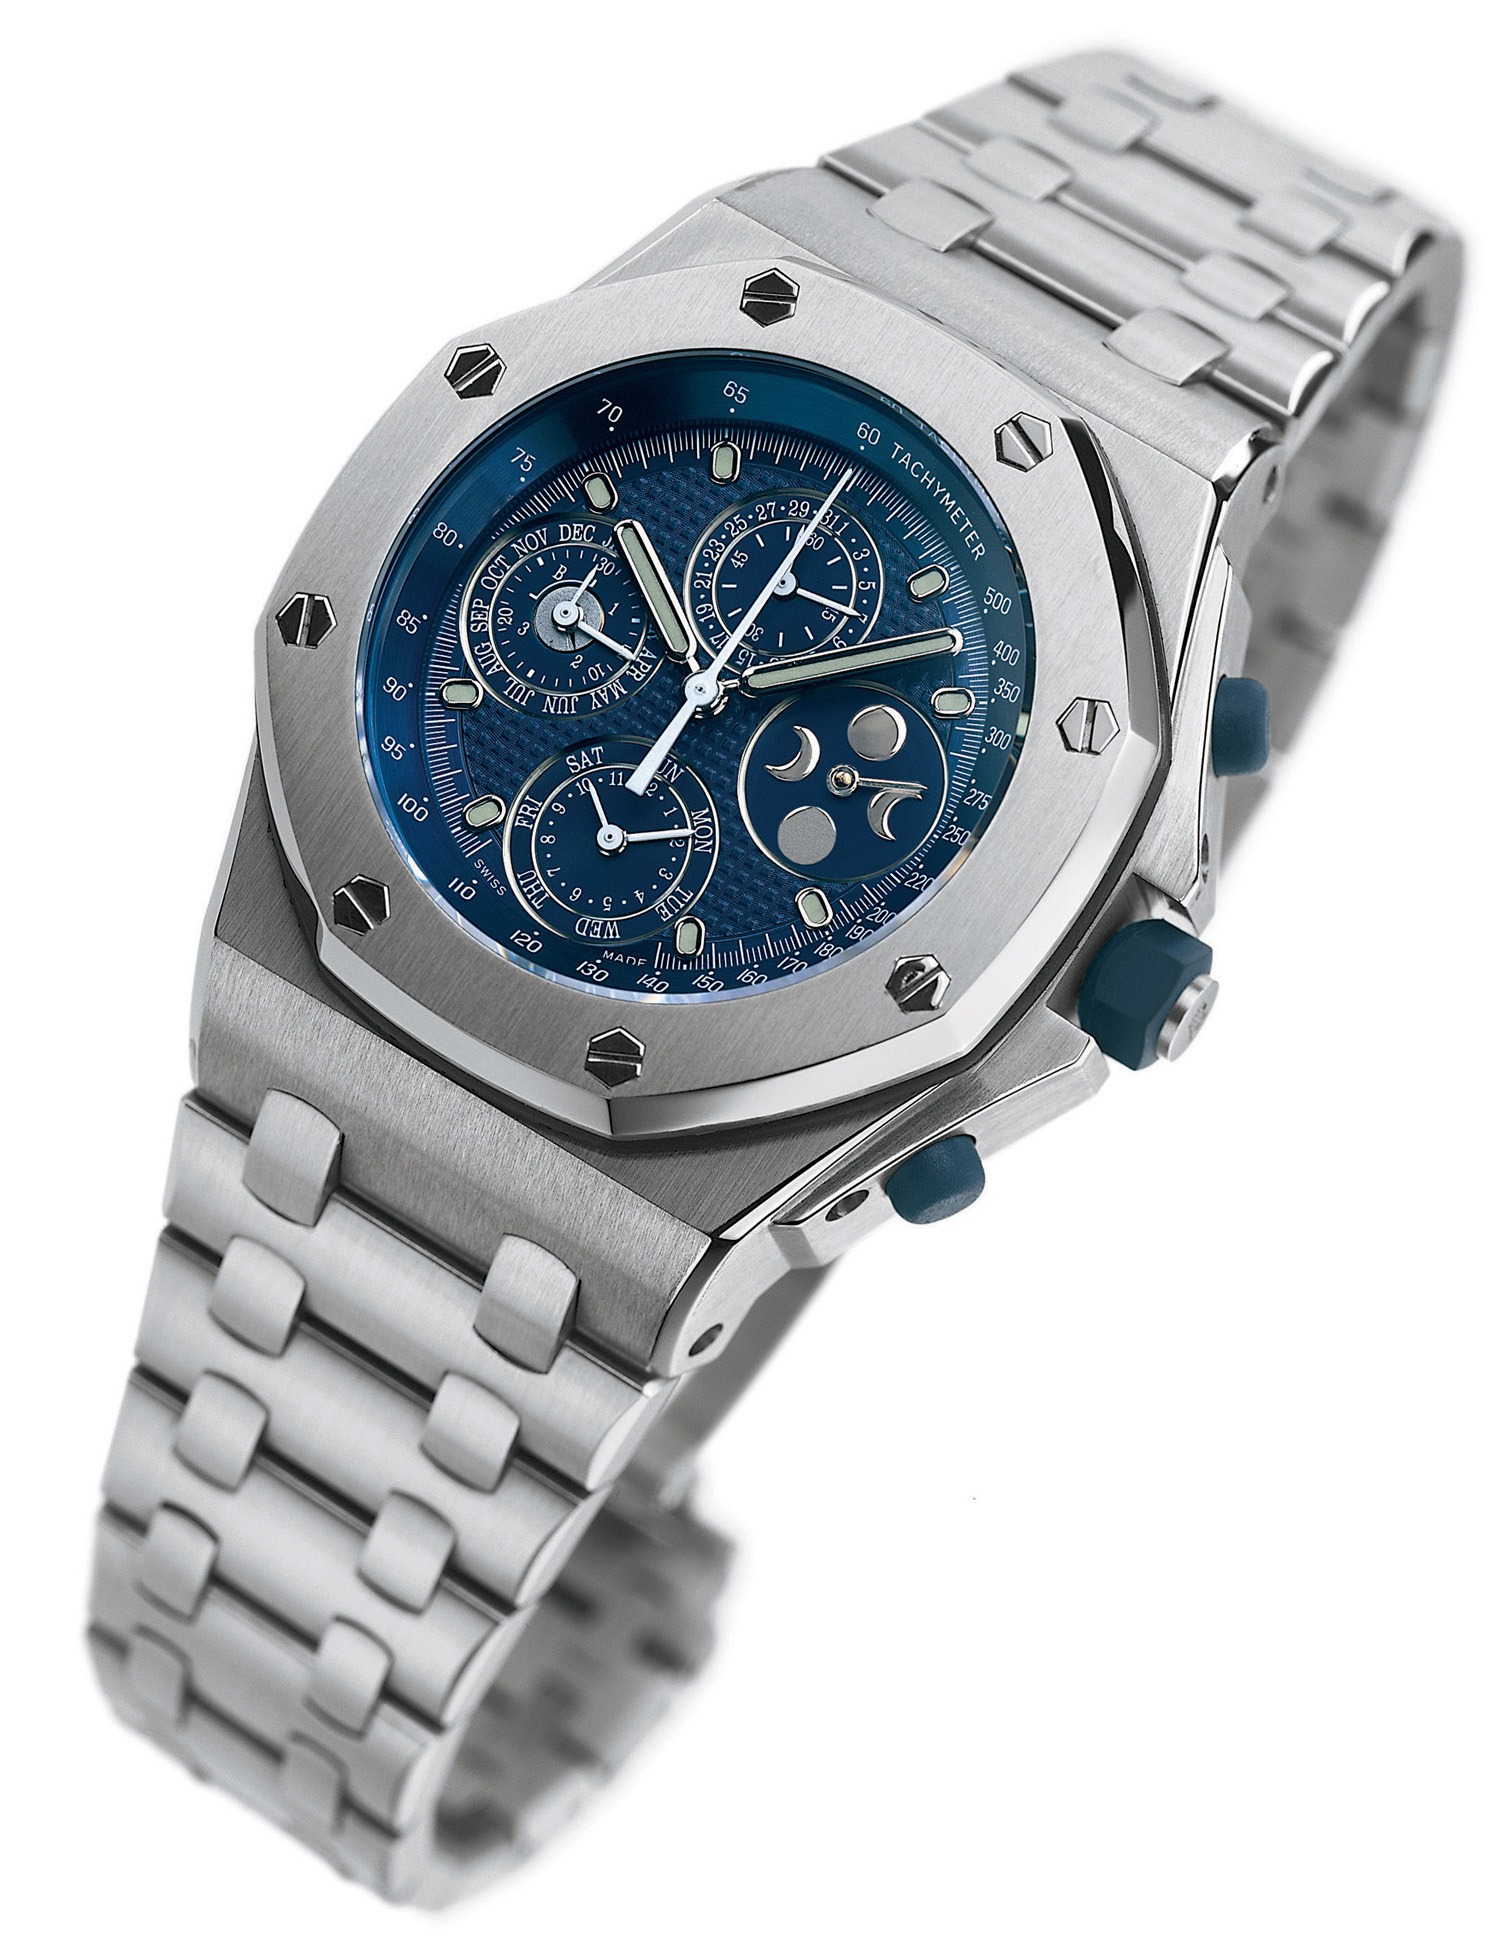 Audemars Piguet Royal Oak Offshore Perpetual Calendar Steel watch REF: 25854ST.OO.1150ST.01